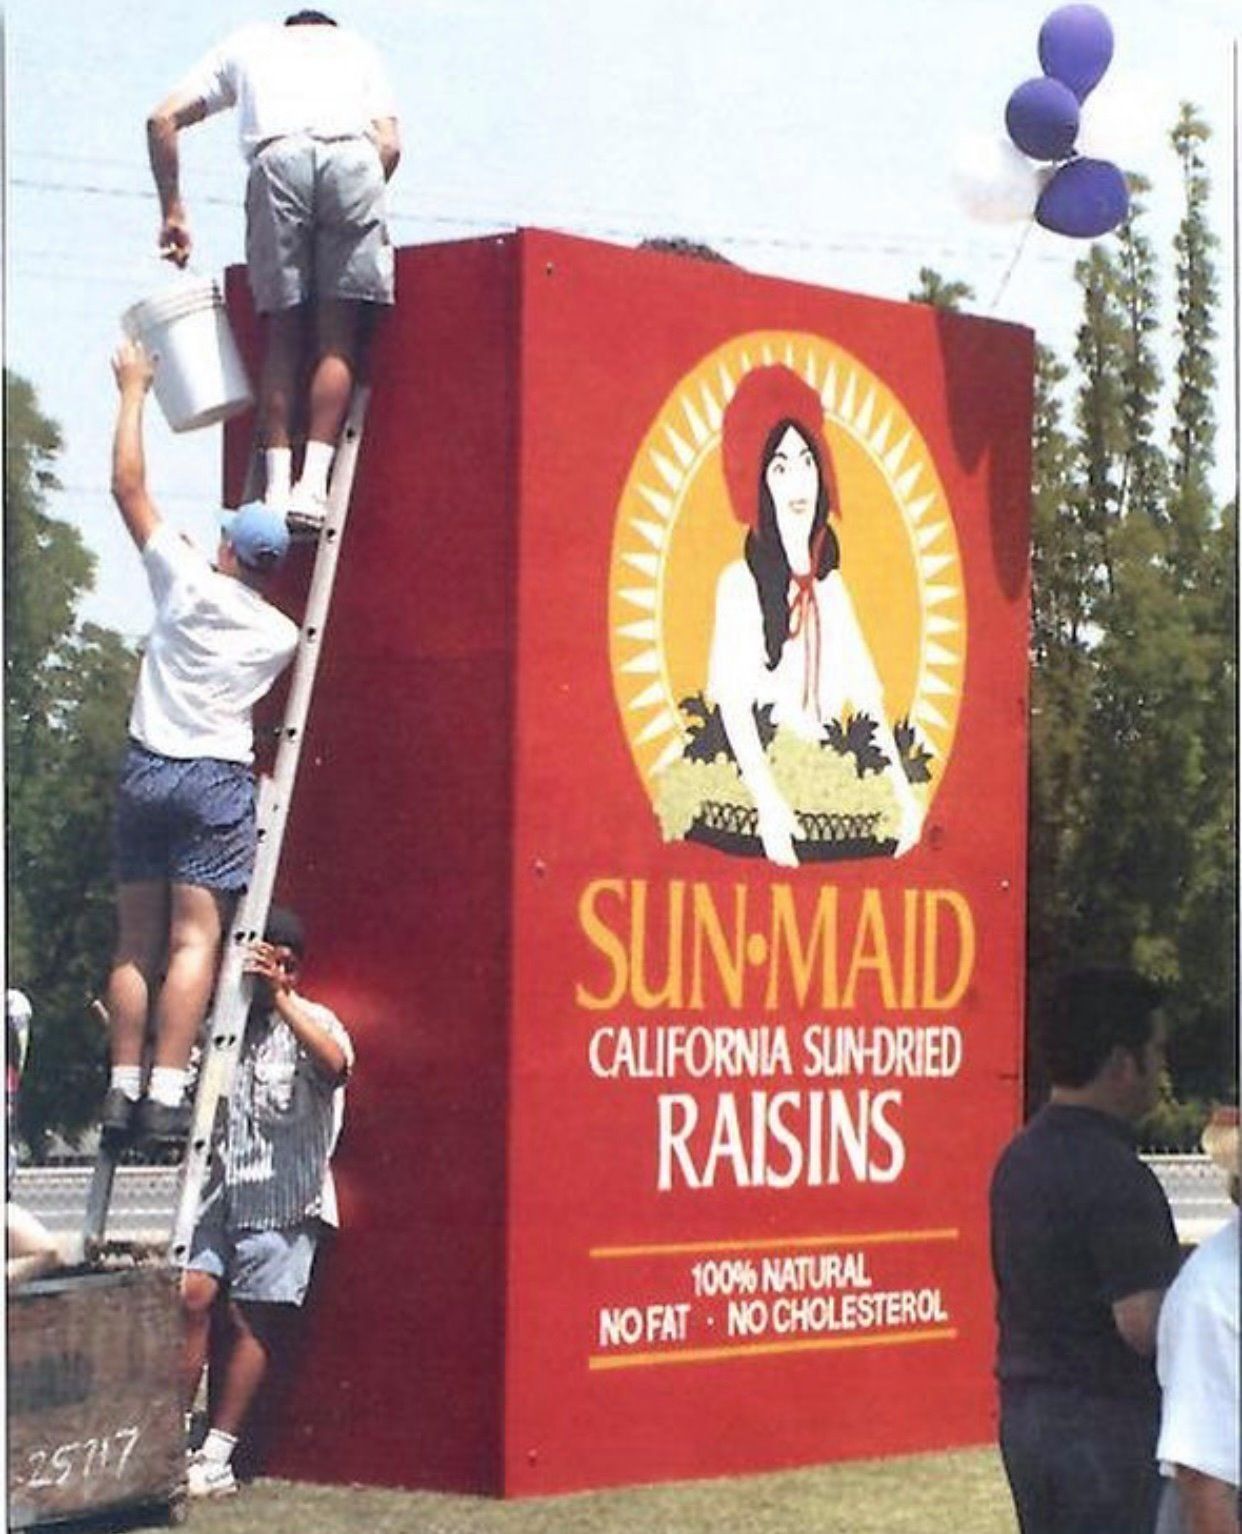 World's Largest Box of Raisins: world record set in Kingsburg, California